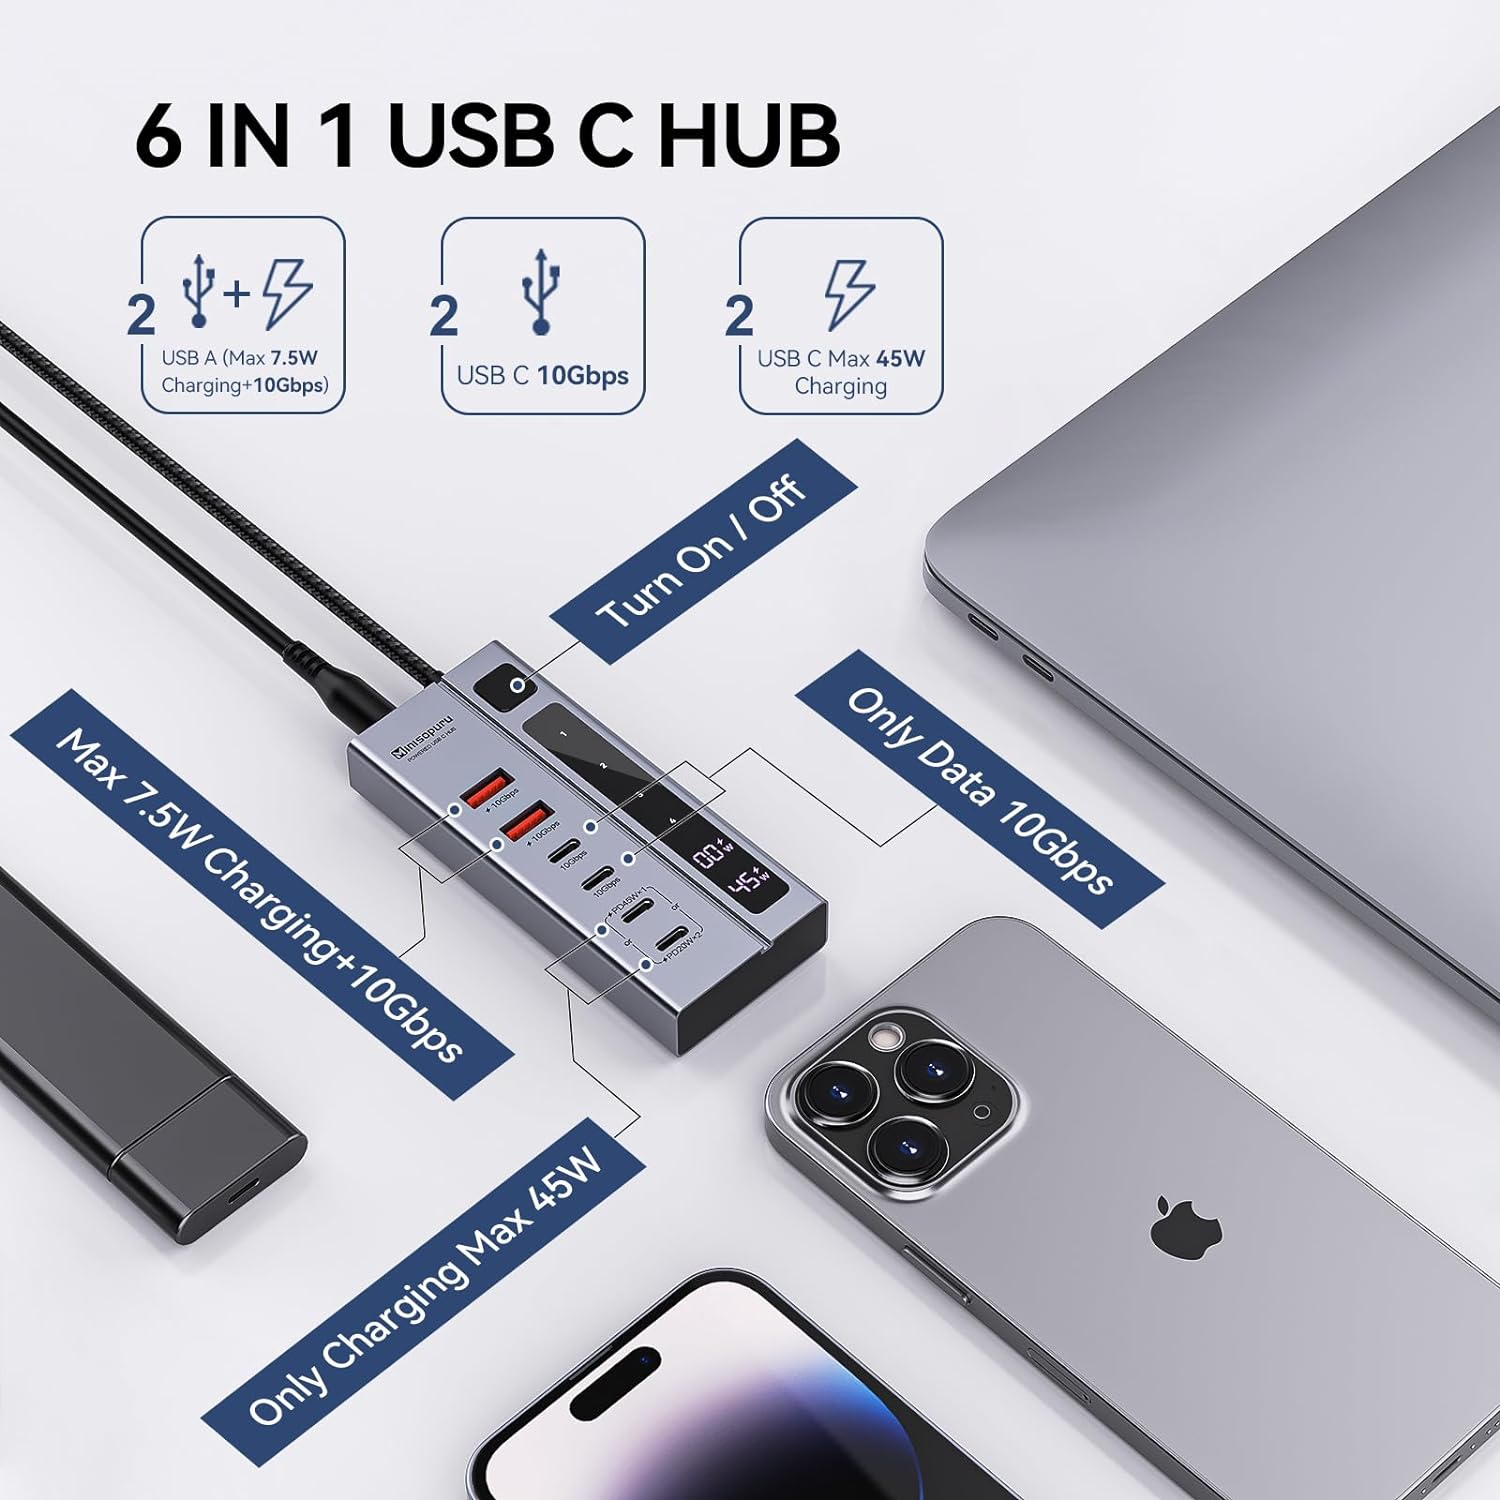 Minisopuru Powered USB C Hub with 72W Power Adapter| MH706A